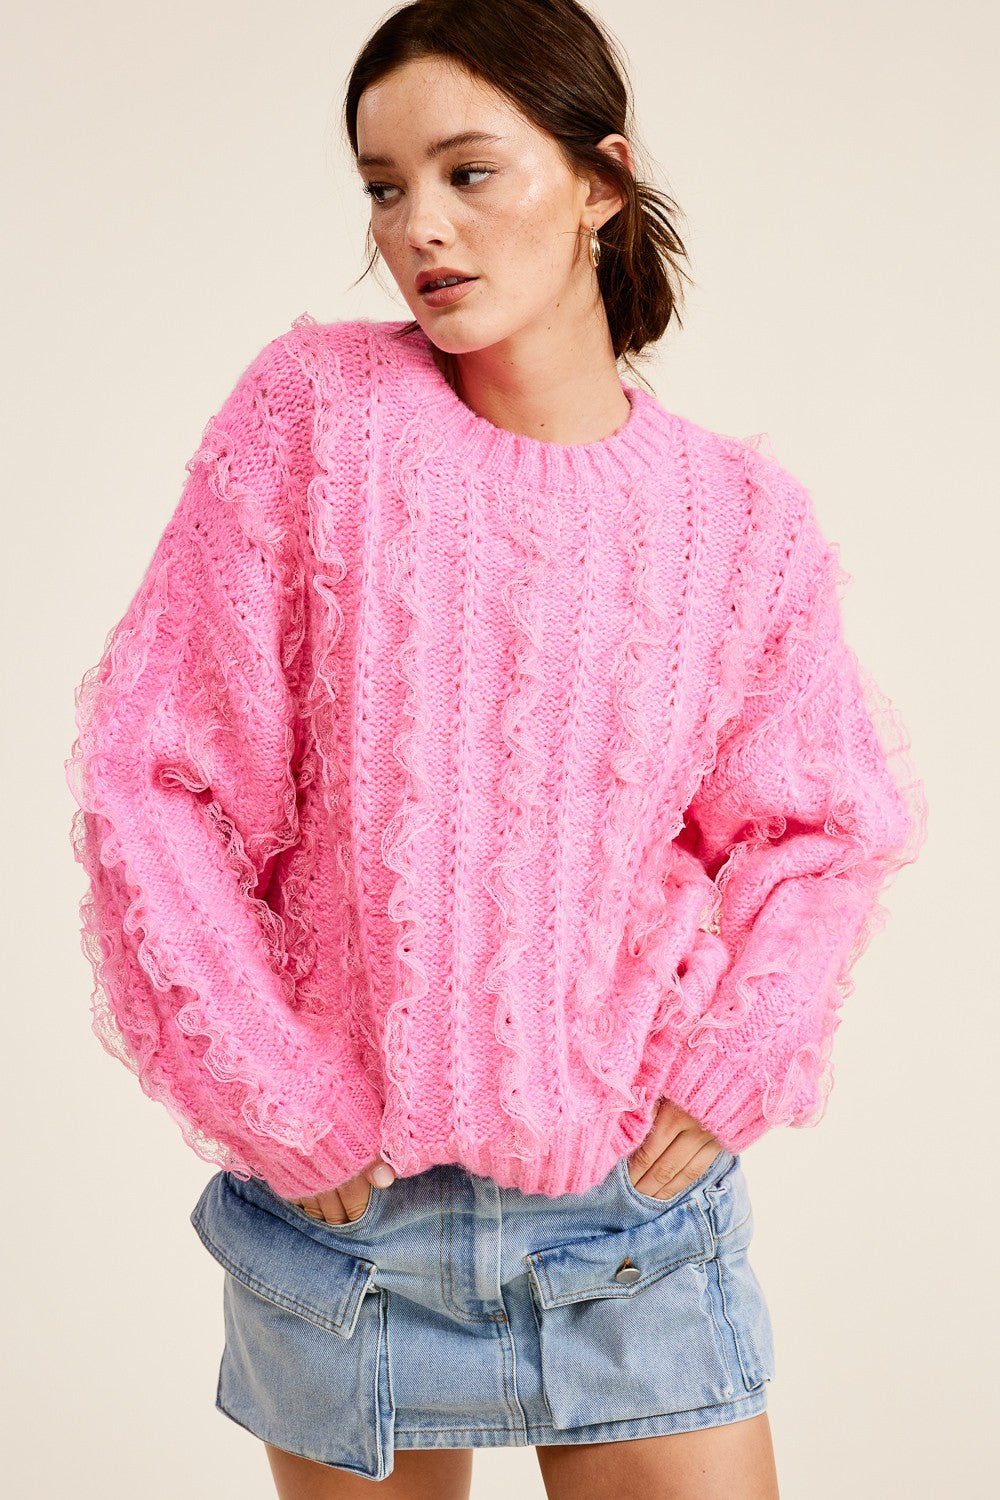 Barbie Pink Sweater - Beciga